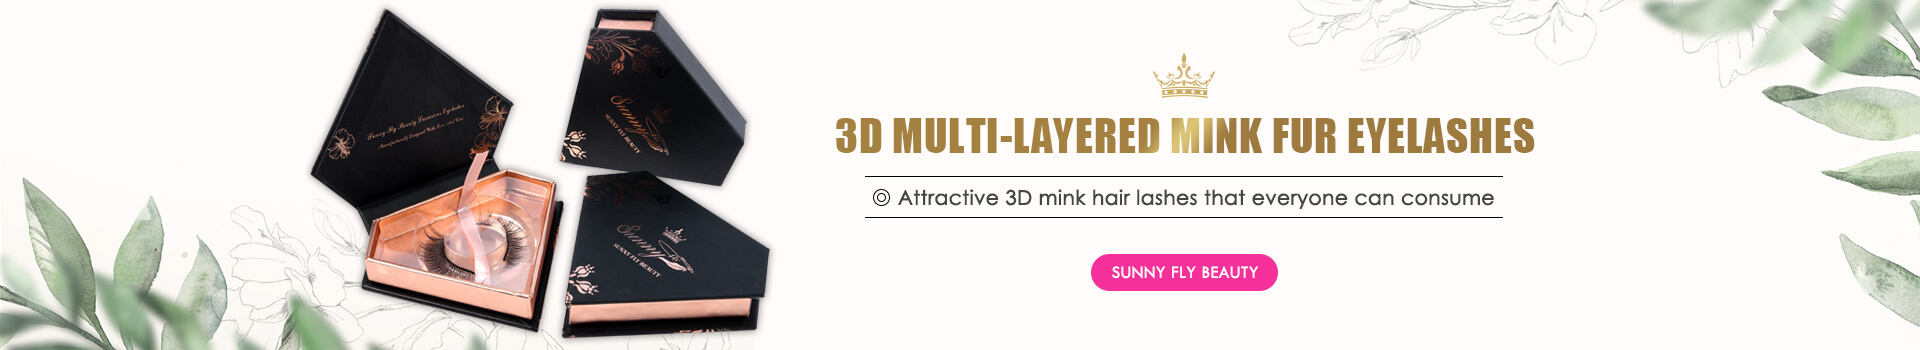 3D Multi-layered Mink Fur Eyelashes MG05